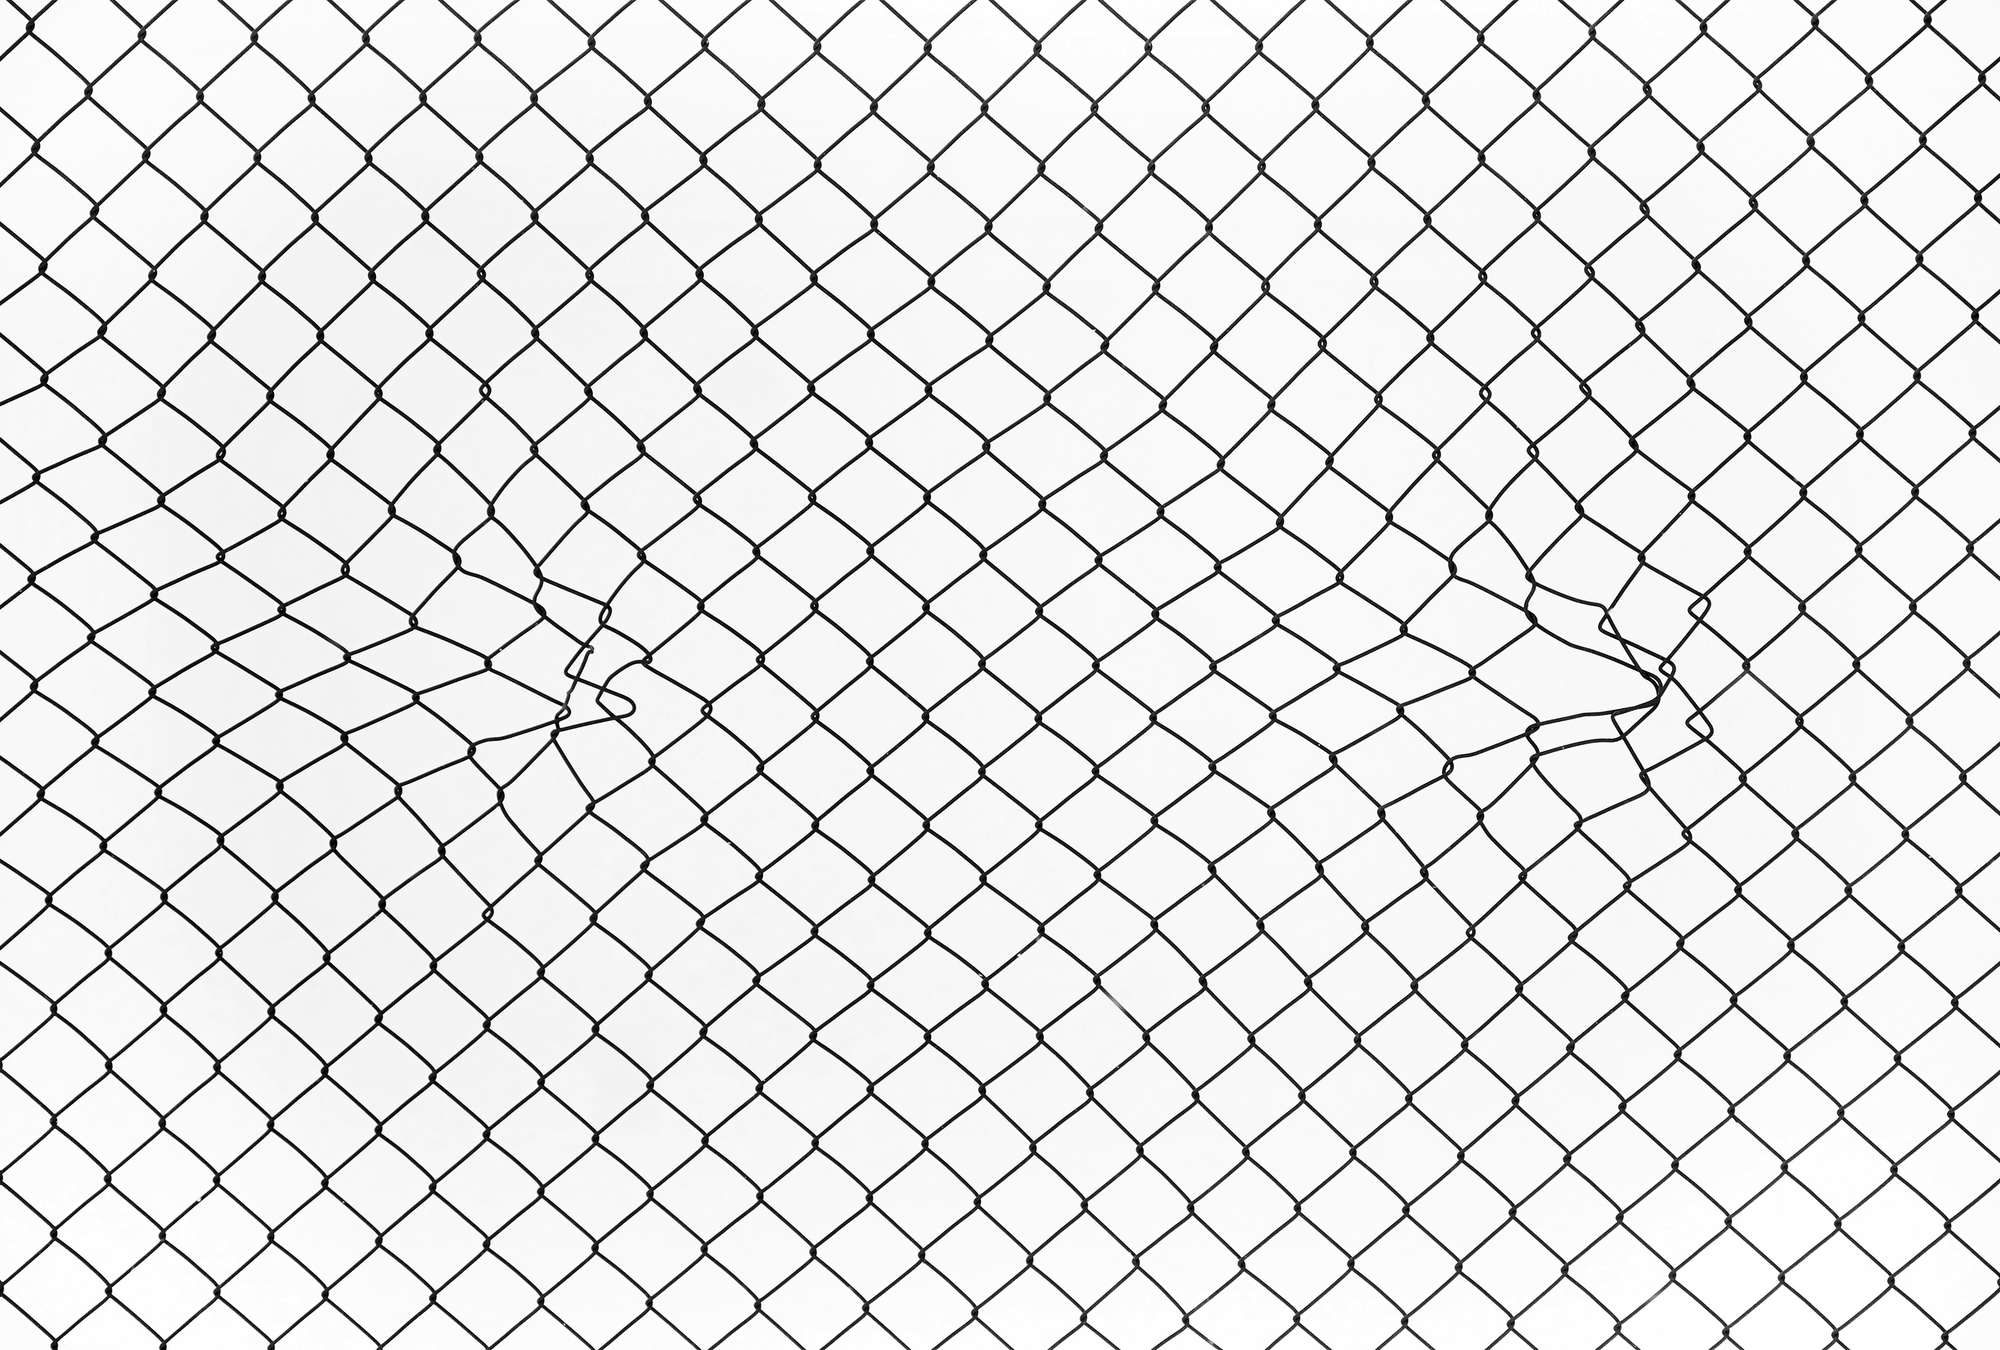             Design Fototapete Gitternetz Schwarz-Weiß Grafik
        